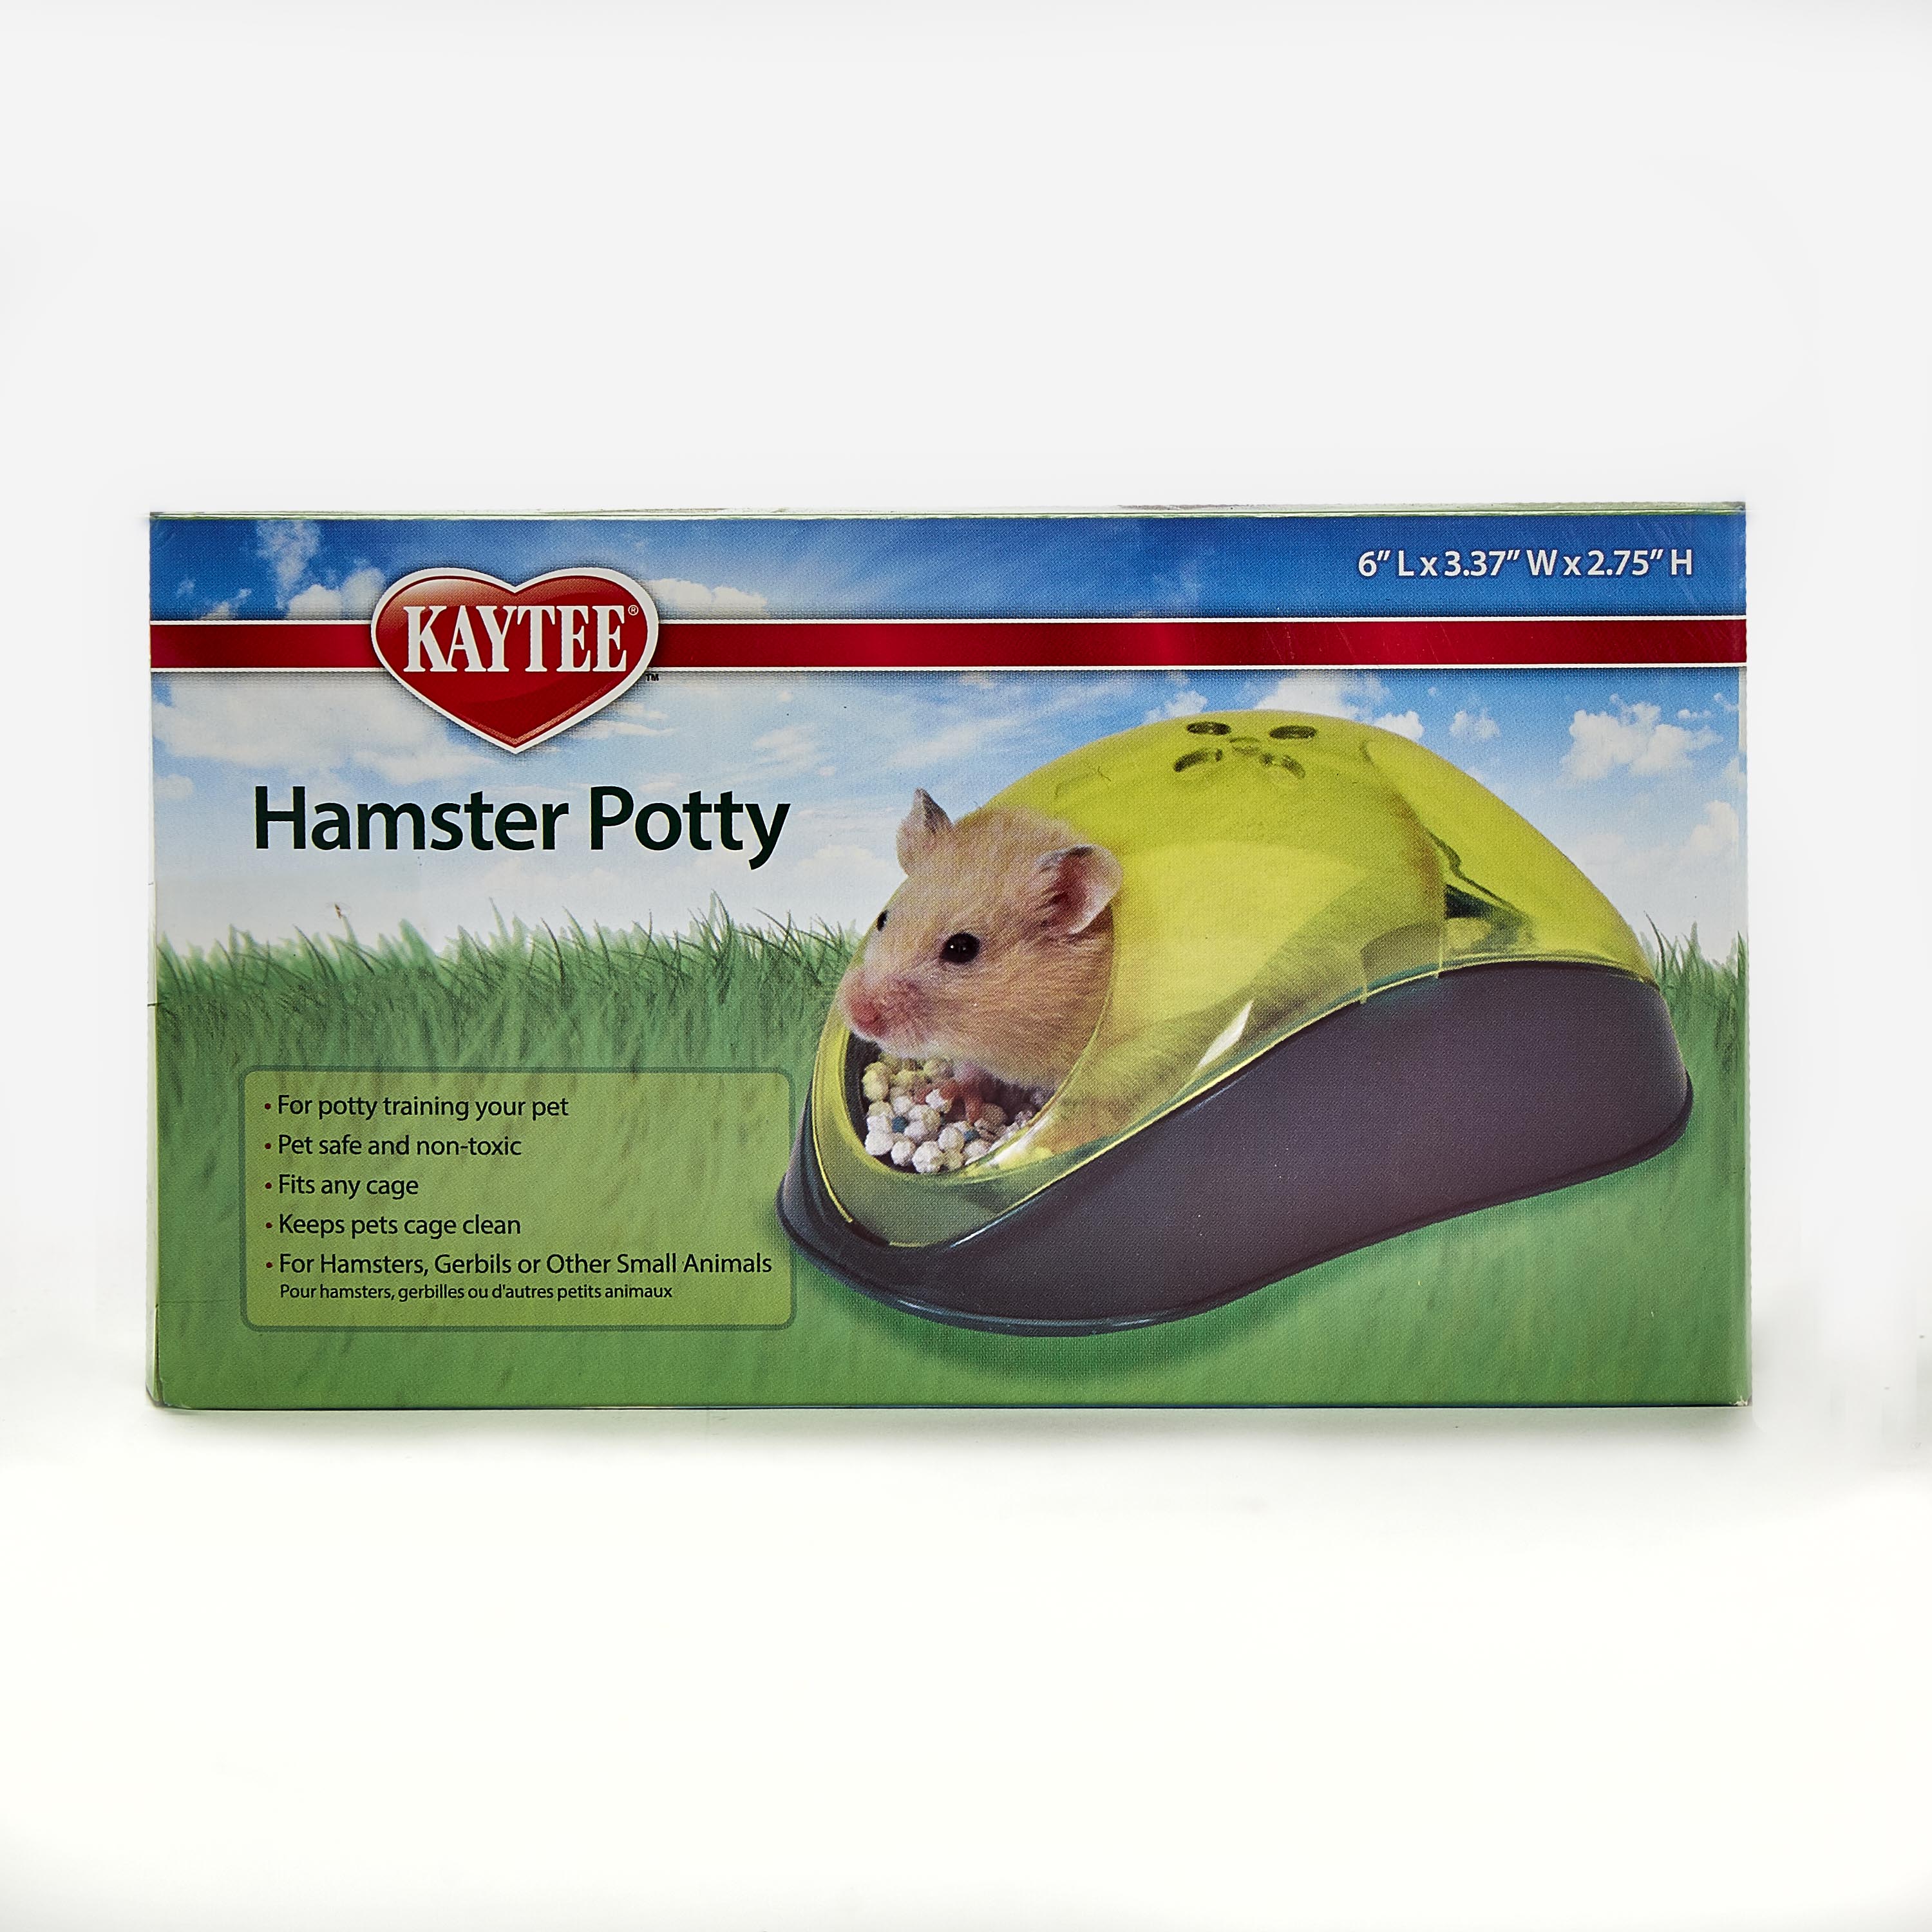 Kaytee Hamster Potty Assorted Colors 6″ x 3.5″ x 2.75″